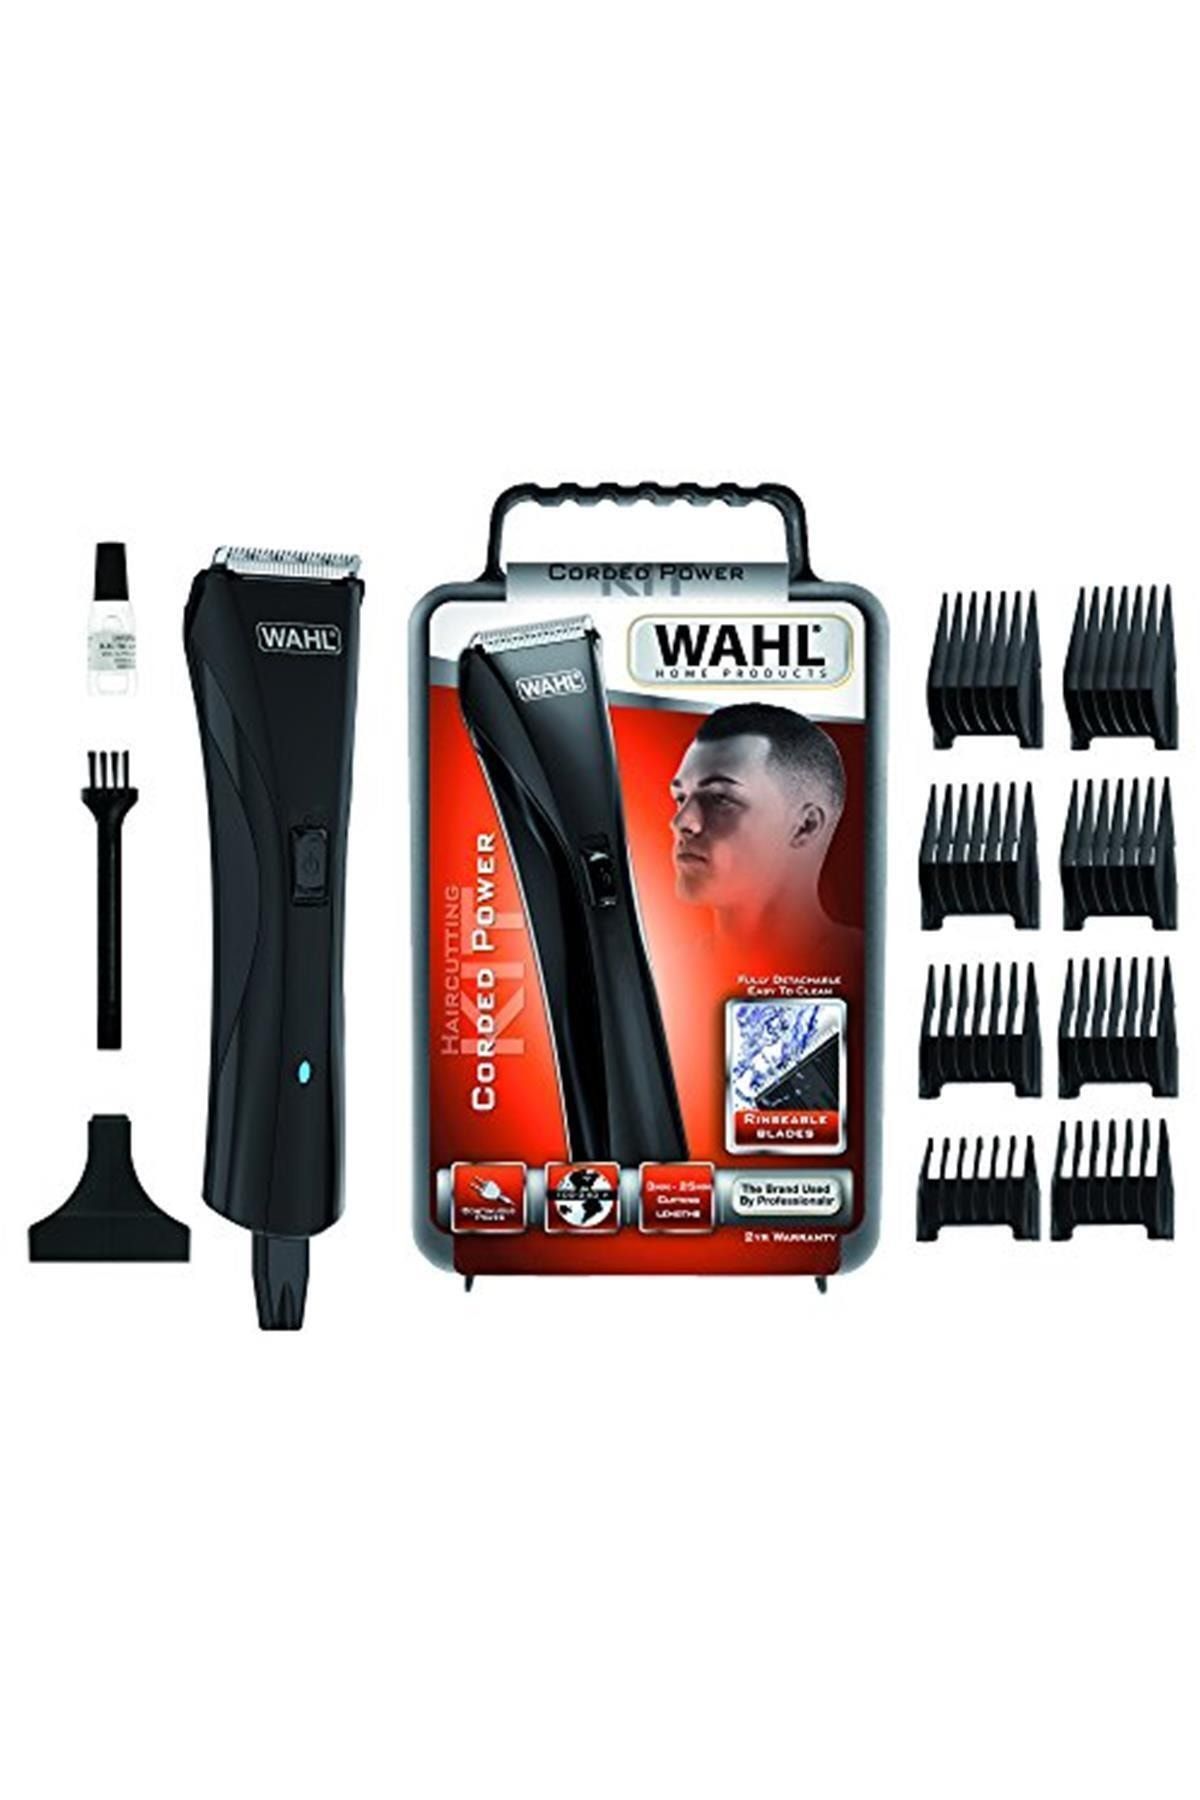 BRCTOPTAN Marka: 09699-1016 9600 Hair & Beard Corded & Tüm Vücut Sac Kesme Makinesi Kategori: Saç